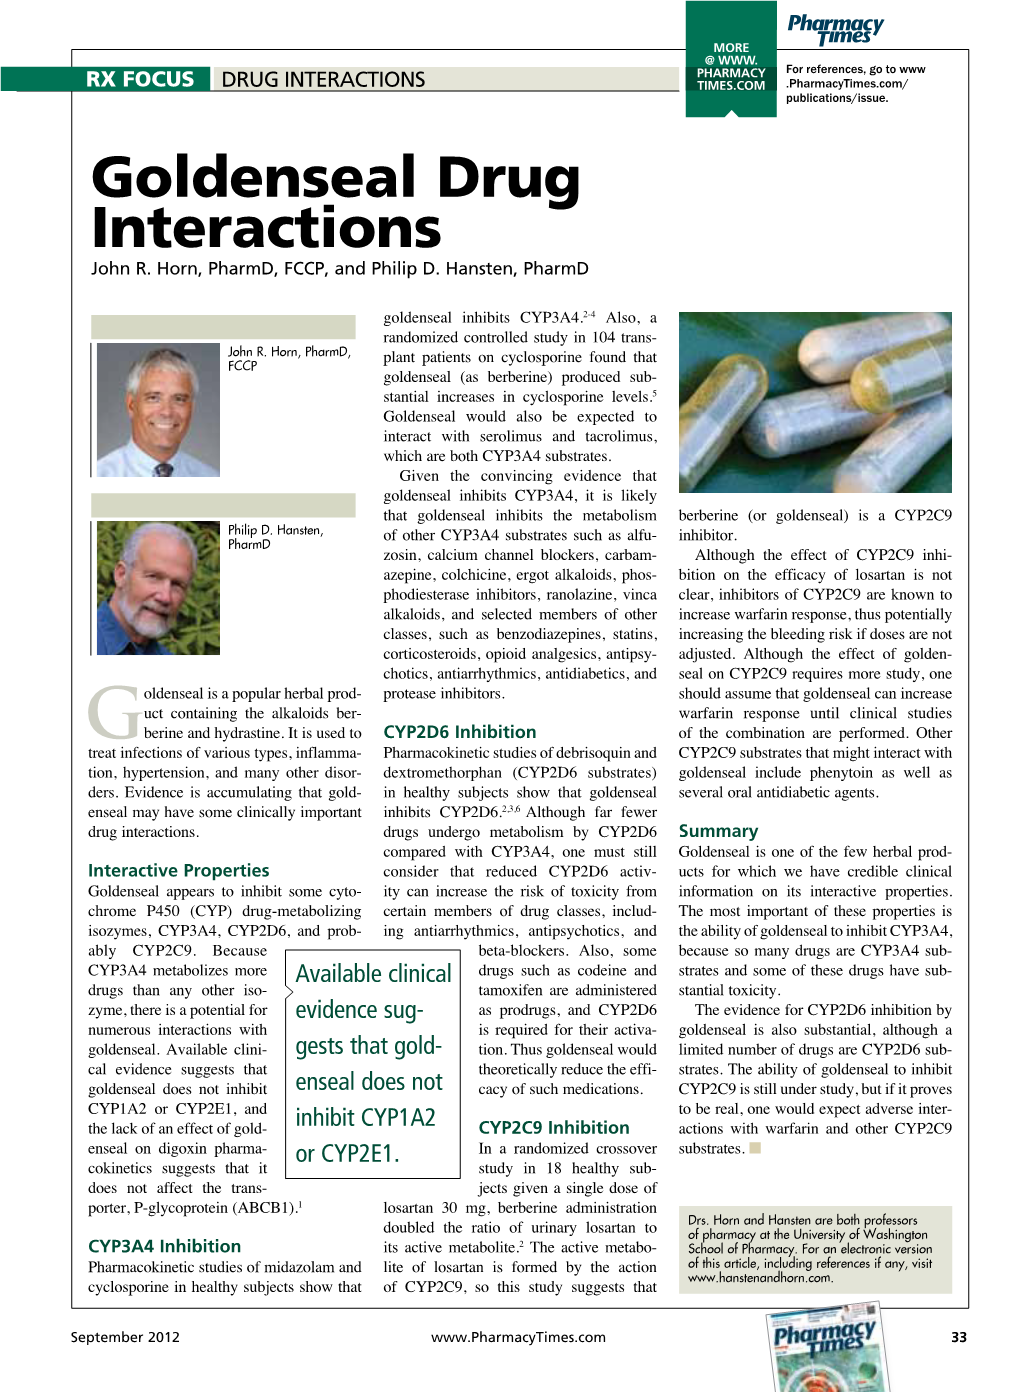 Goldenseal Drug Interactions John R